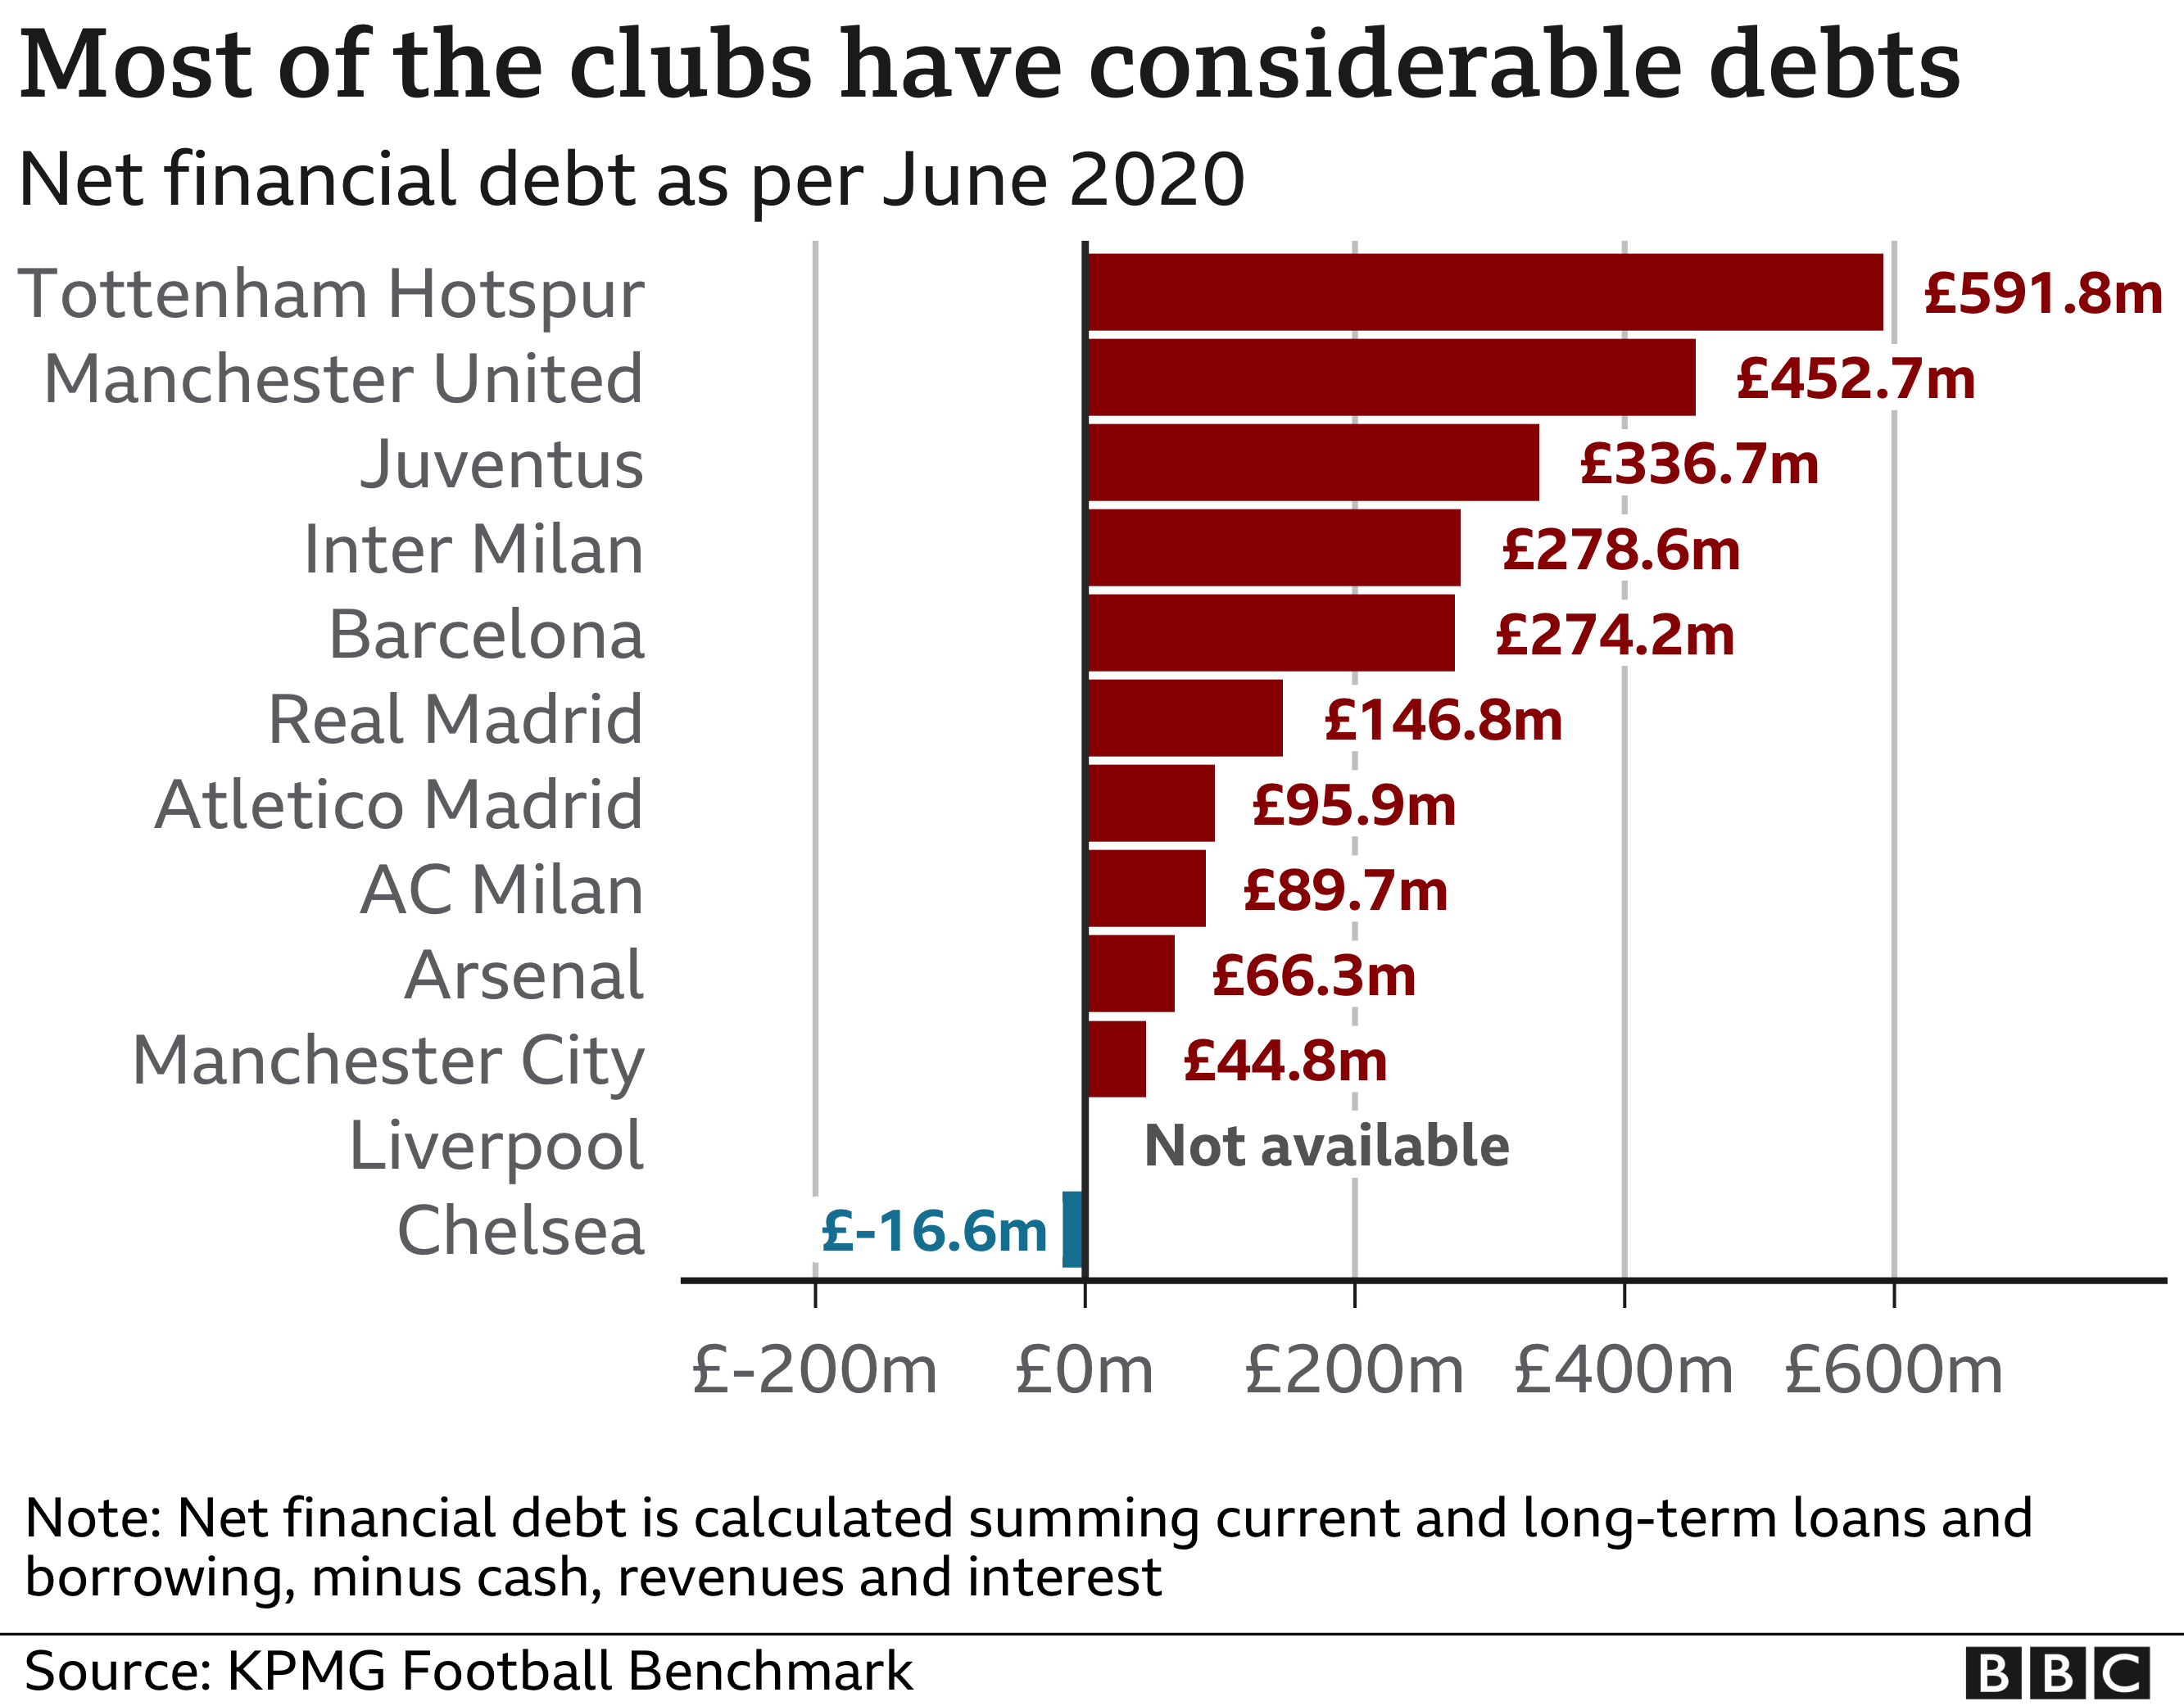 The net financial debts of the top Premier League teams